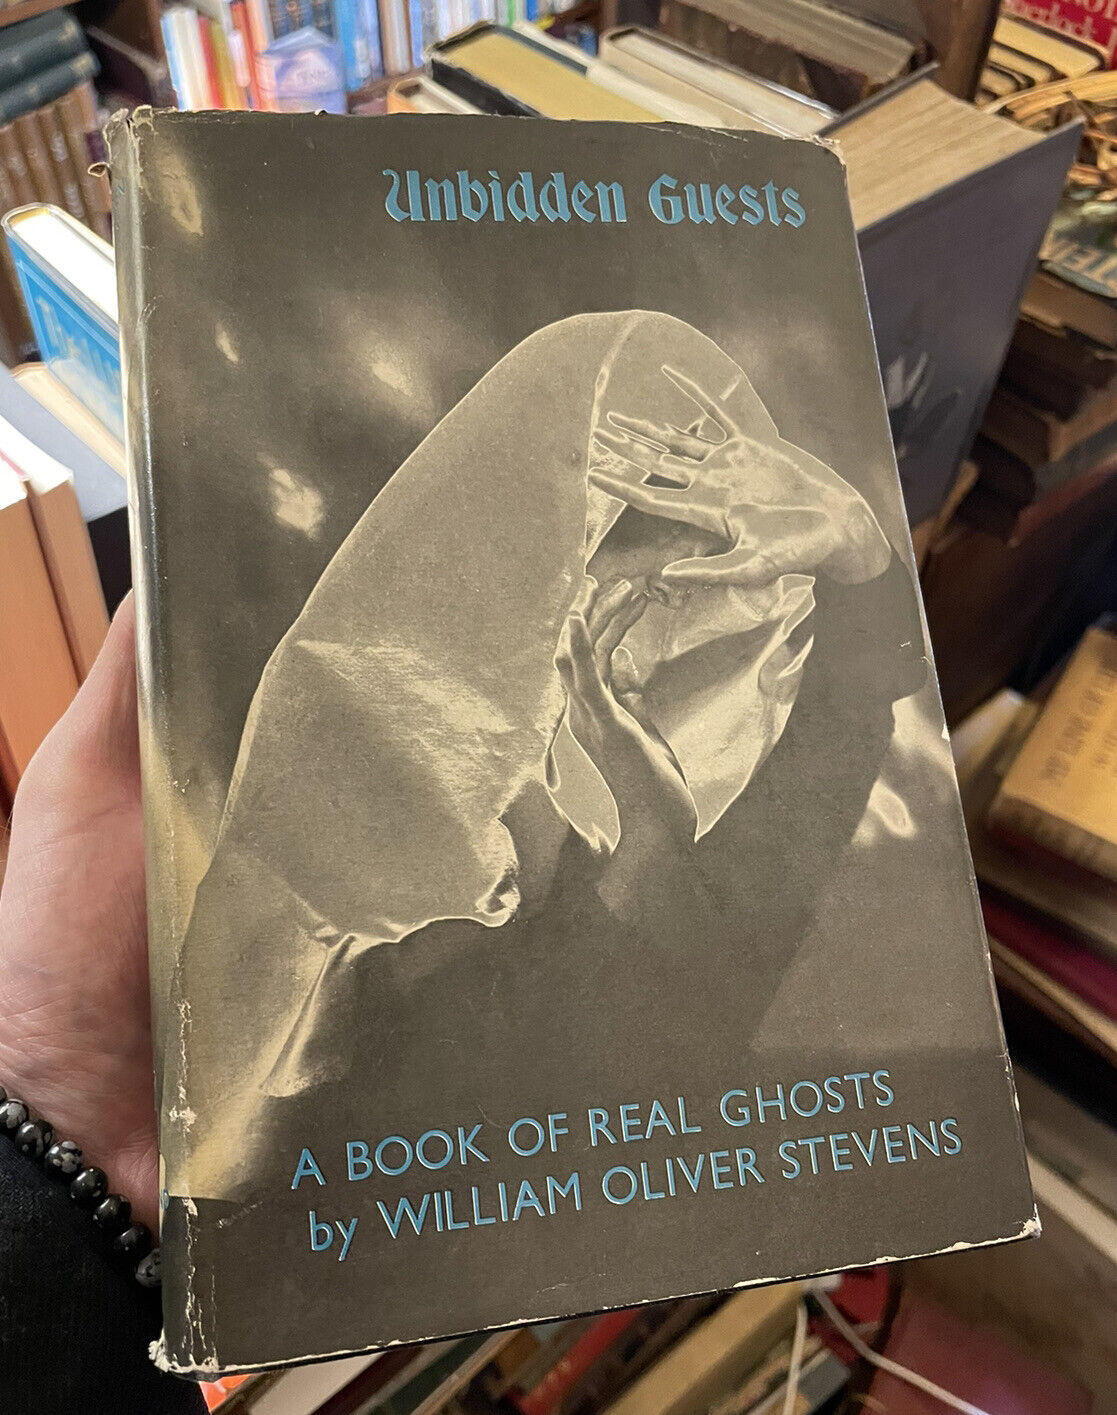 1949 Unbidden Guests; A Book of Real Ghosts : Stevens : Supernatural True Tales